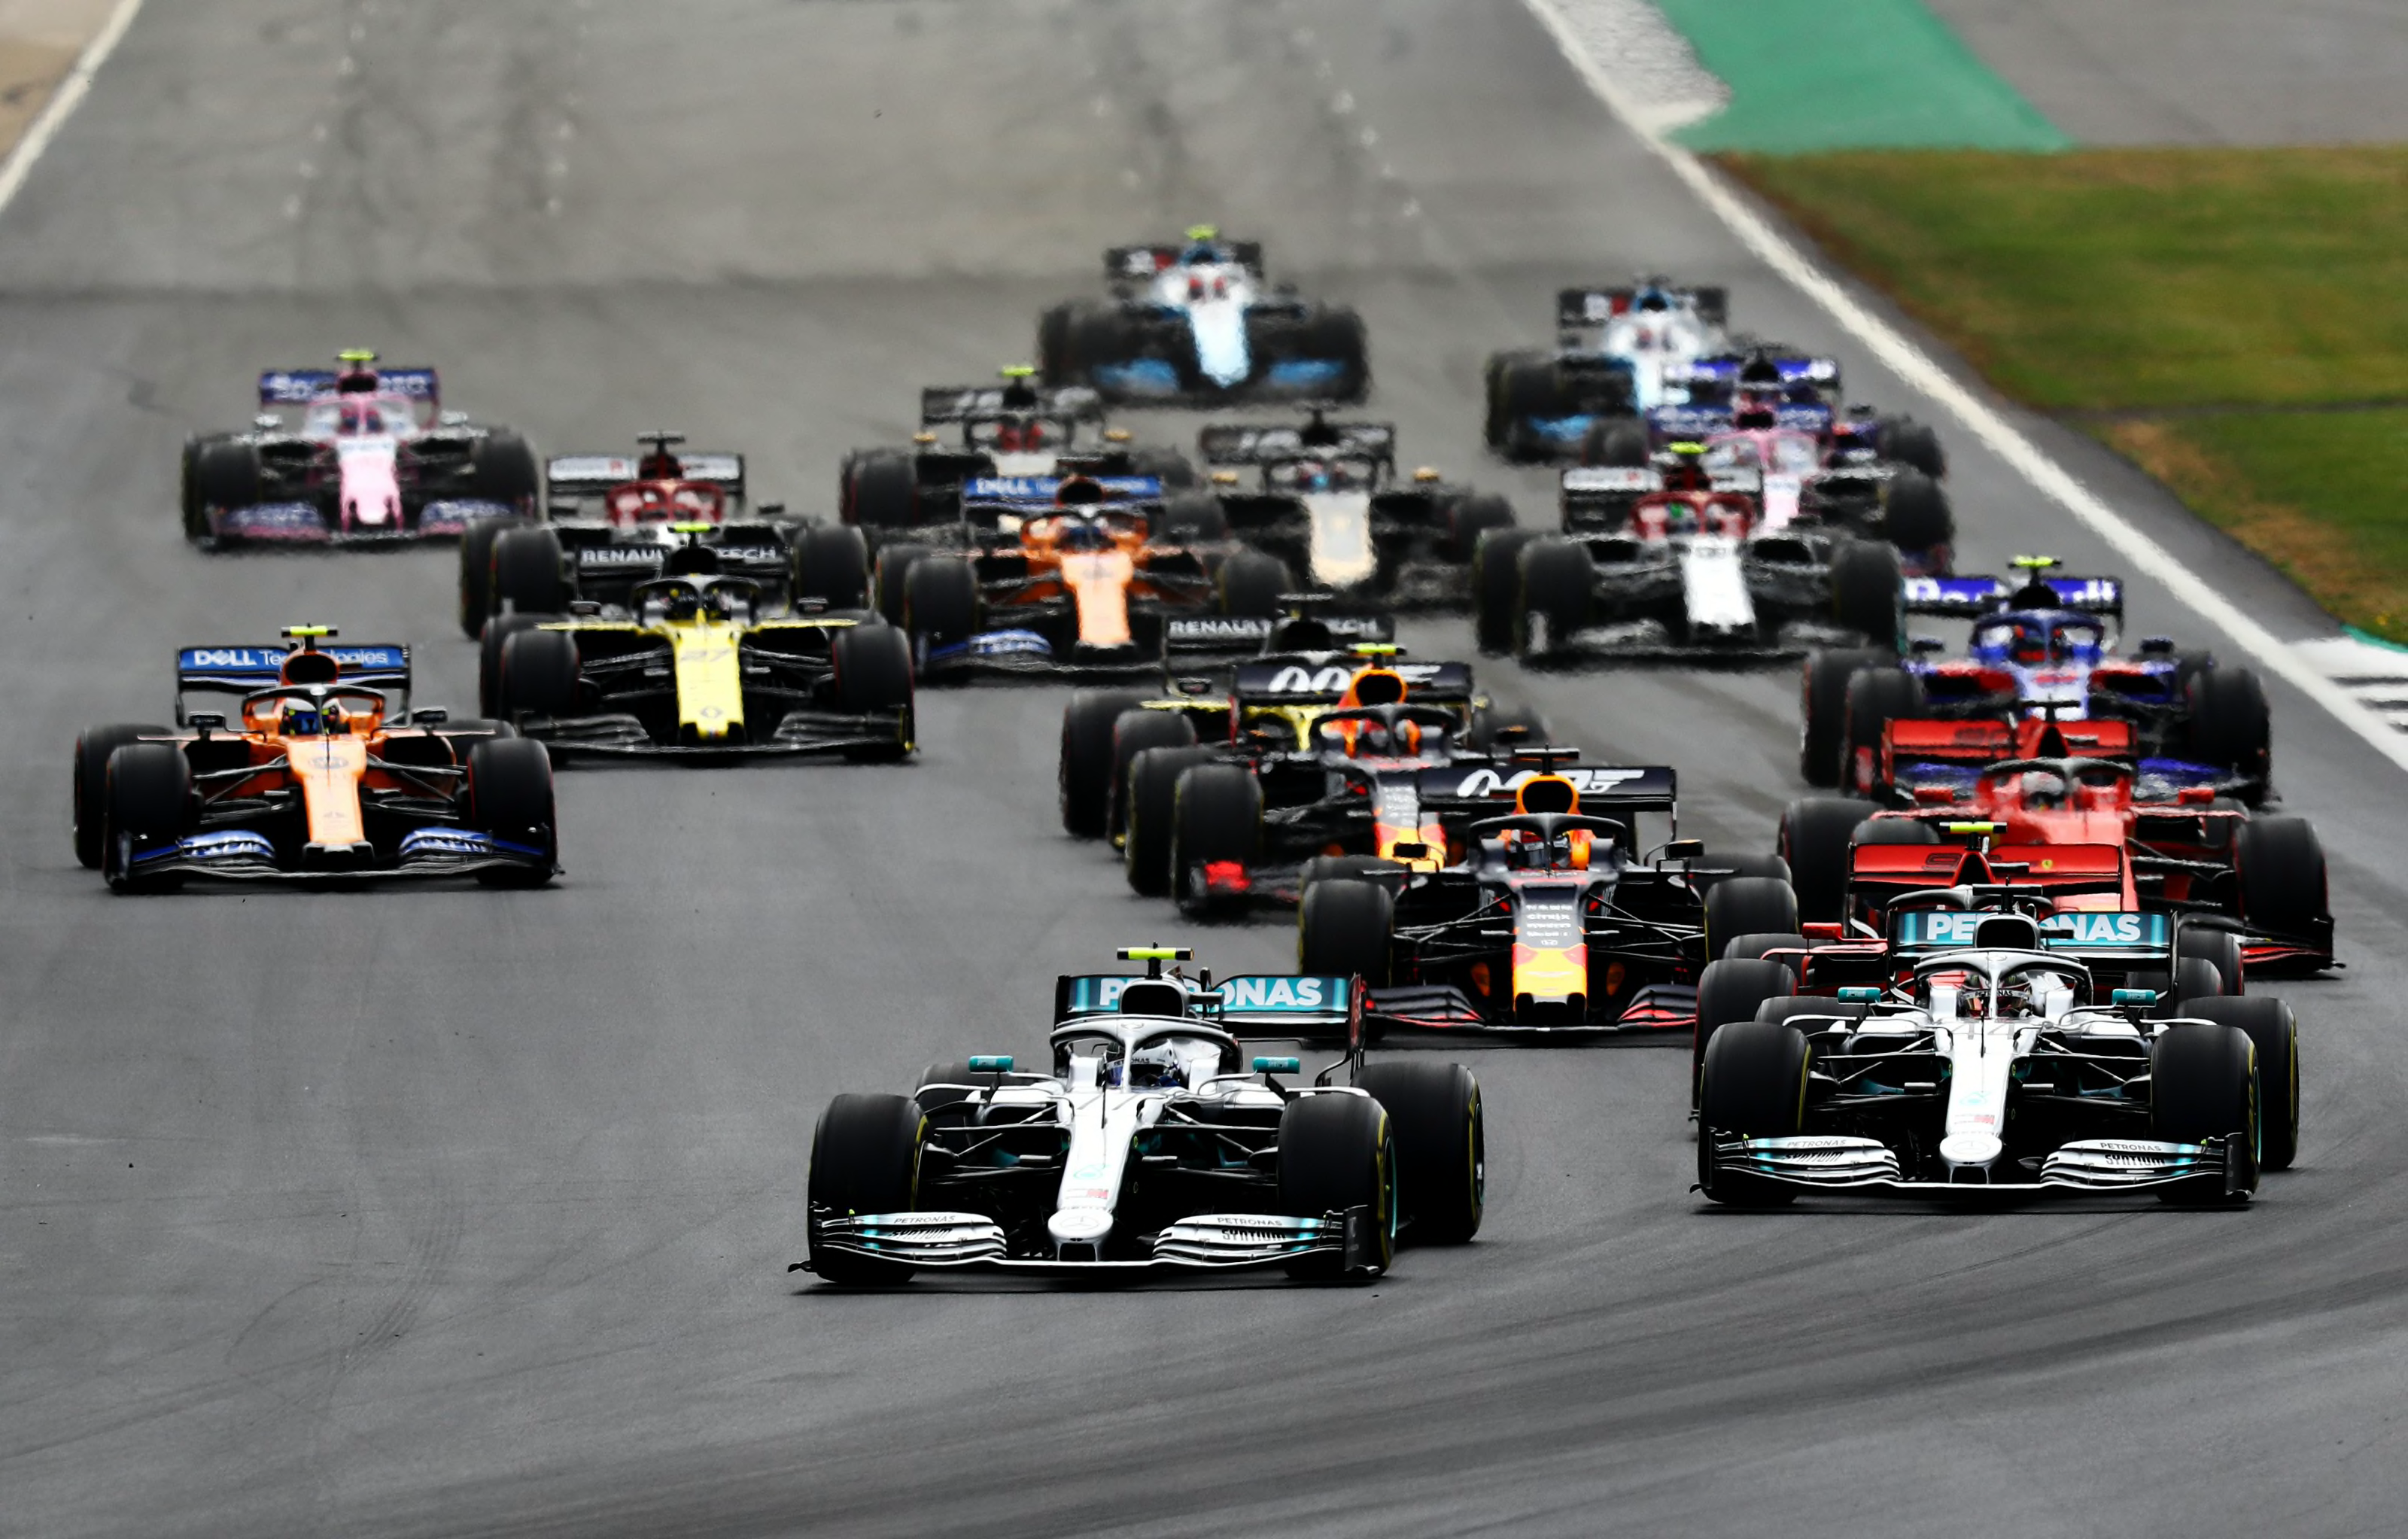 Formula 1 2020 driver lineup Who lands where? Making sense of the rumors